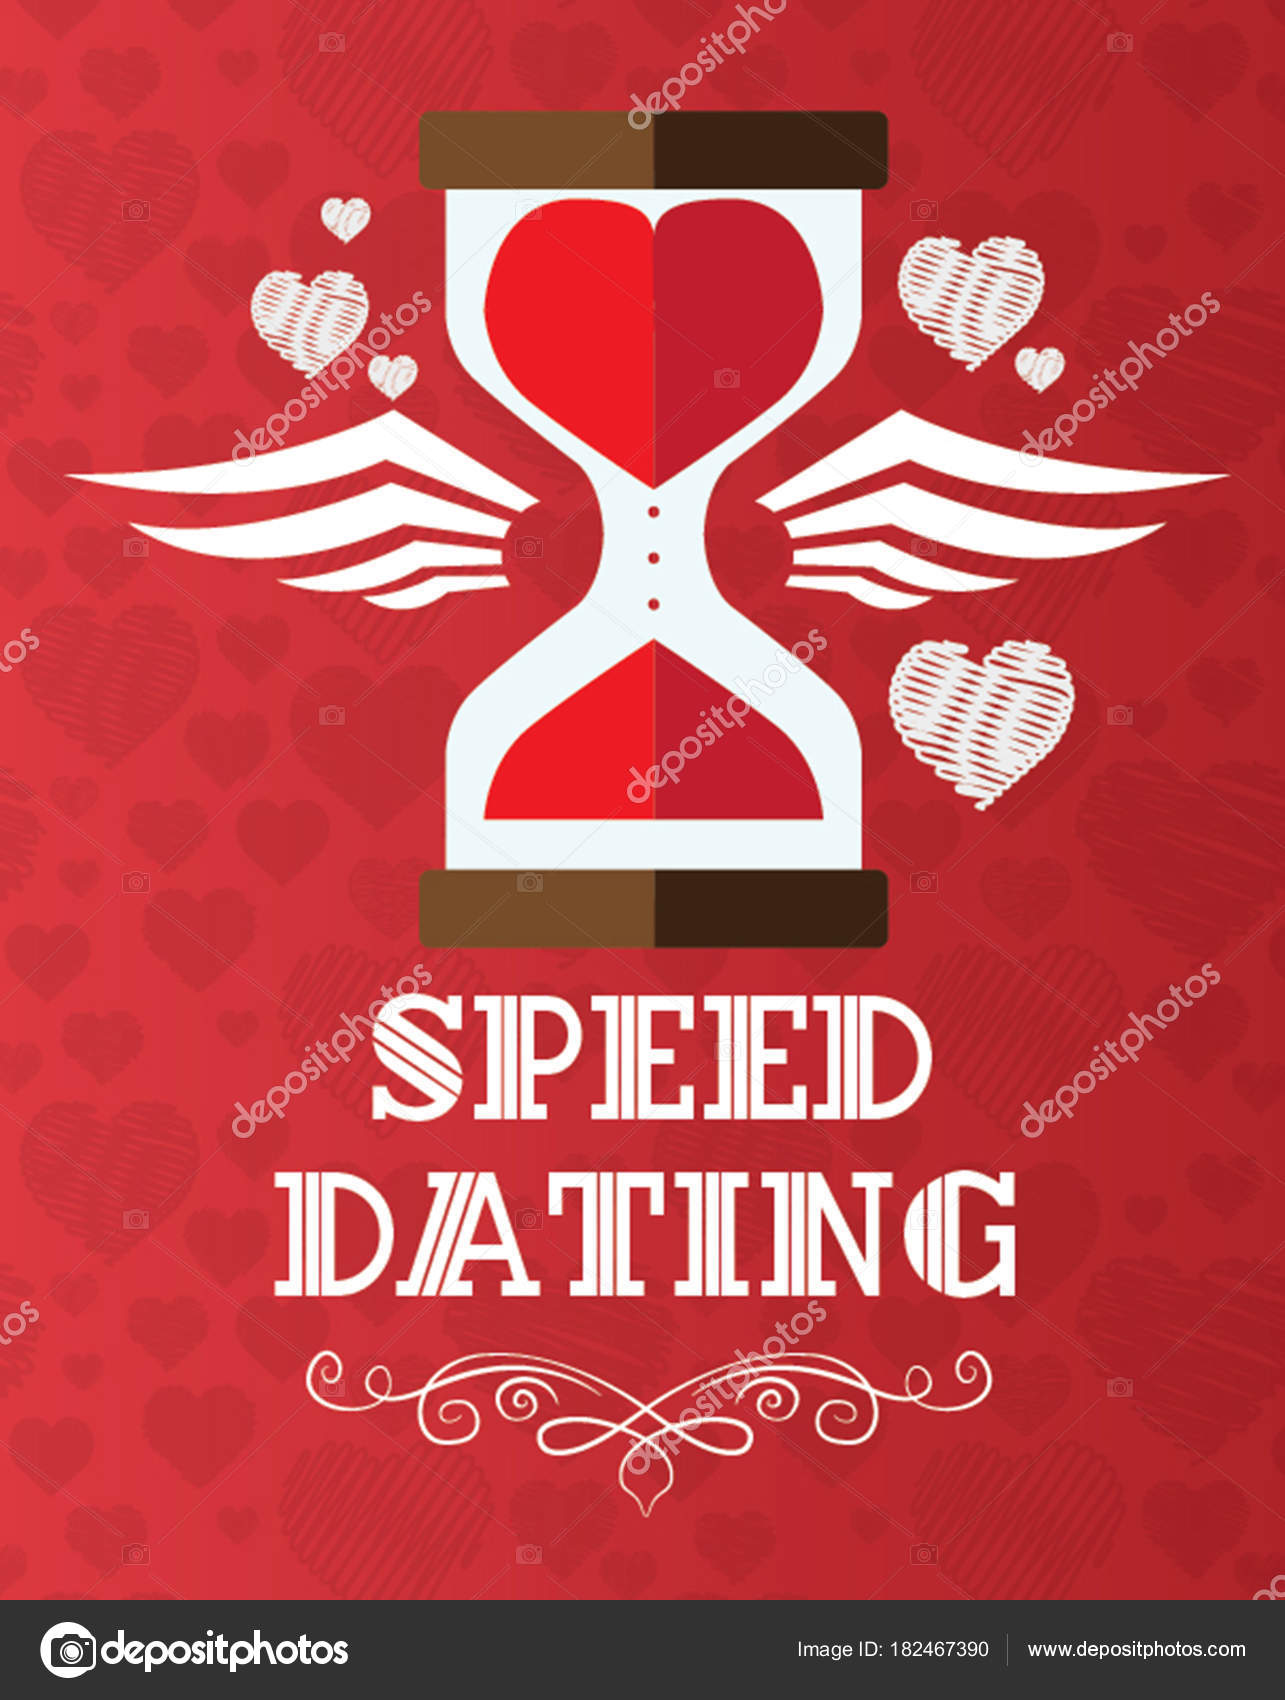 speed​​ dating flyer)